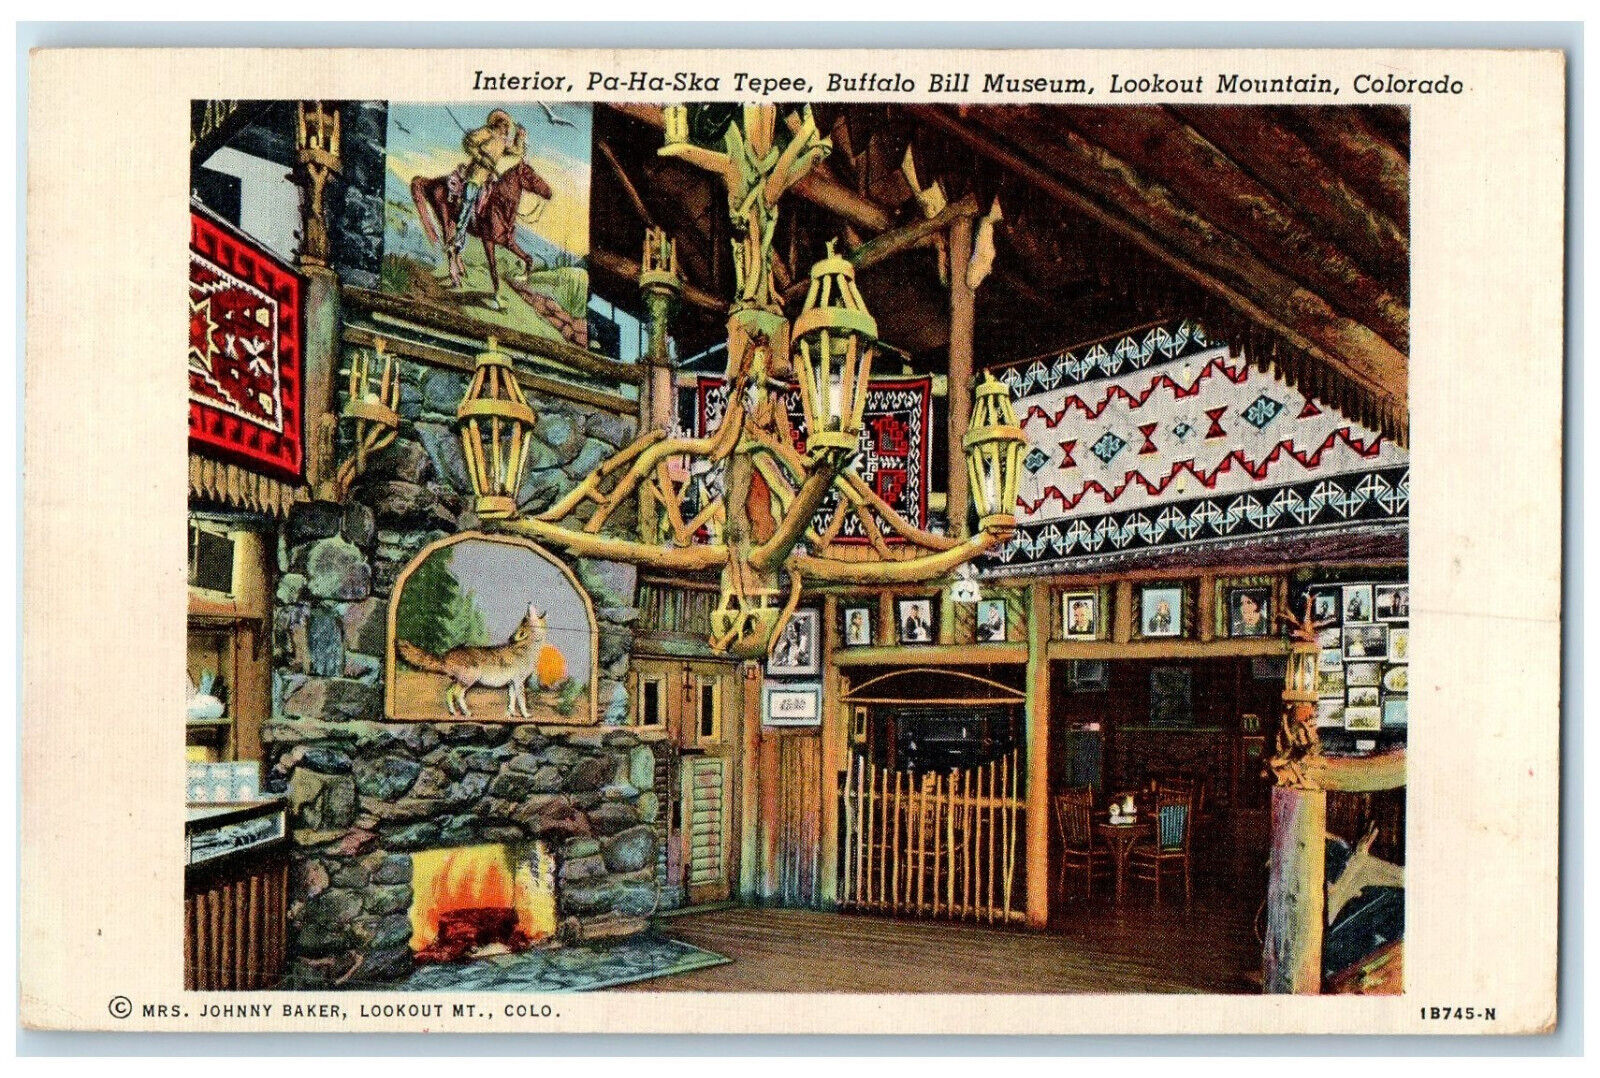 1950 Interior Pa-Ha-Ska Tepee Buffalo Bill Museum Lookout Mountain CO Postcard